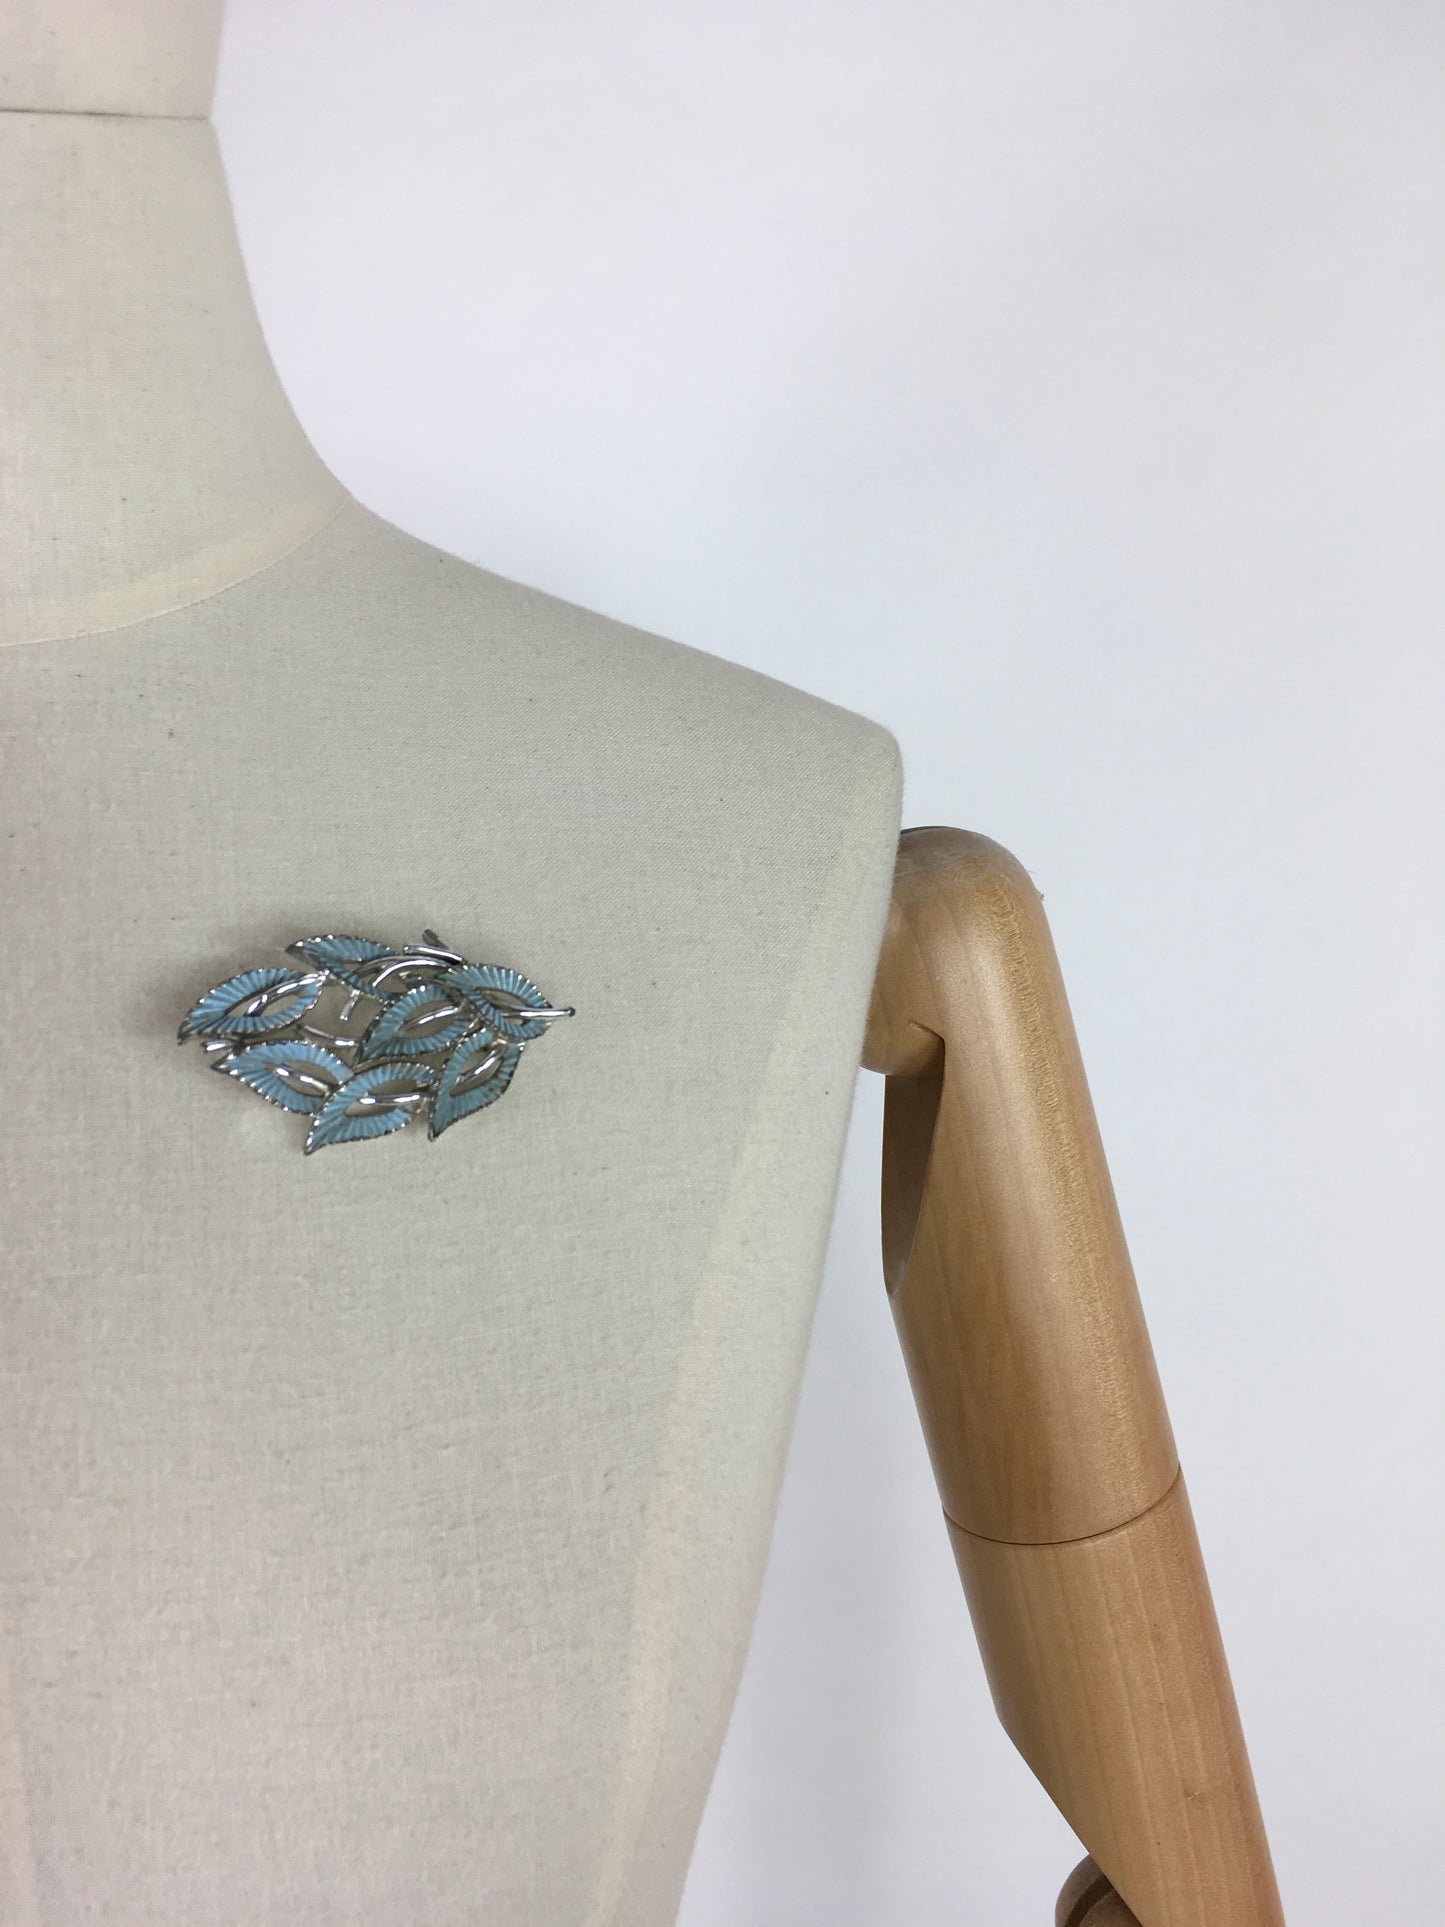 Original 1950s Powder Blue Brooch - Fabulous Shaped Piece of Costume Jewellery